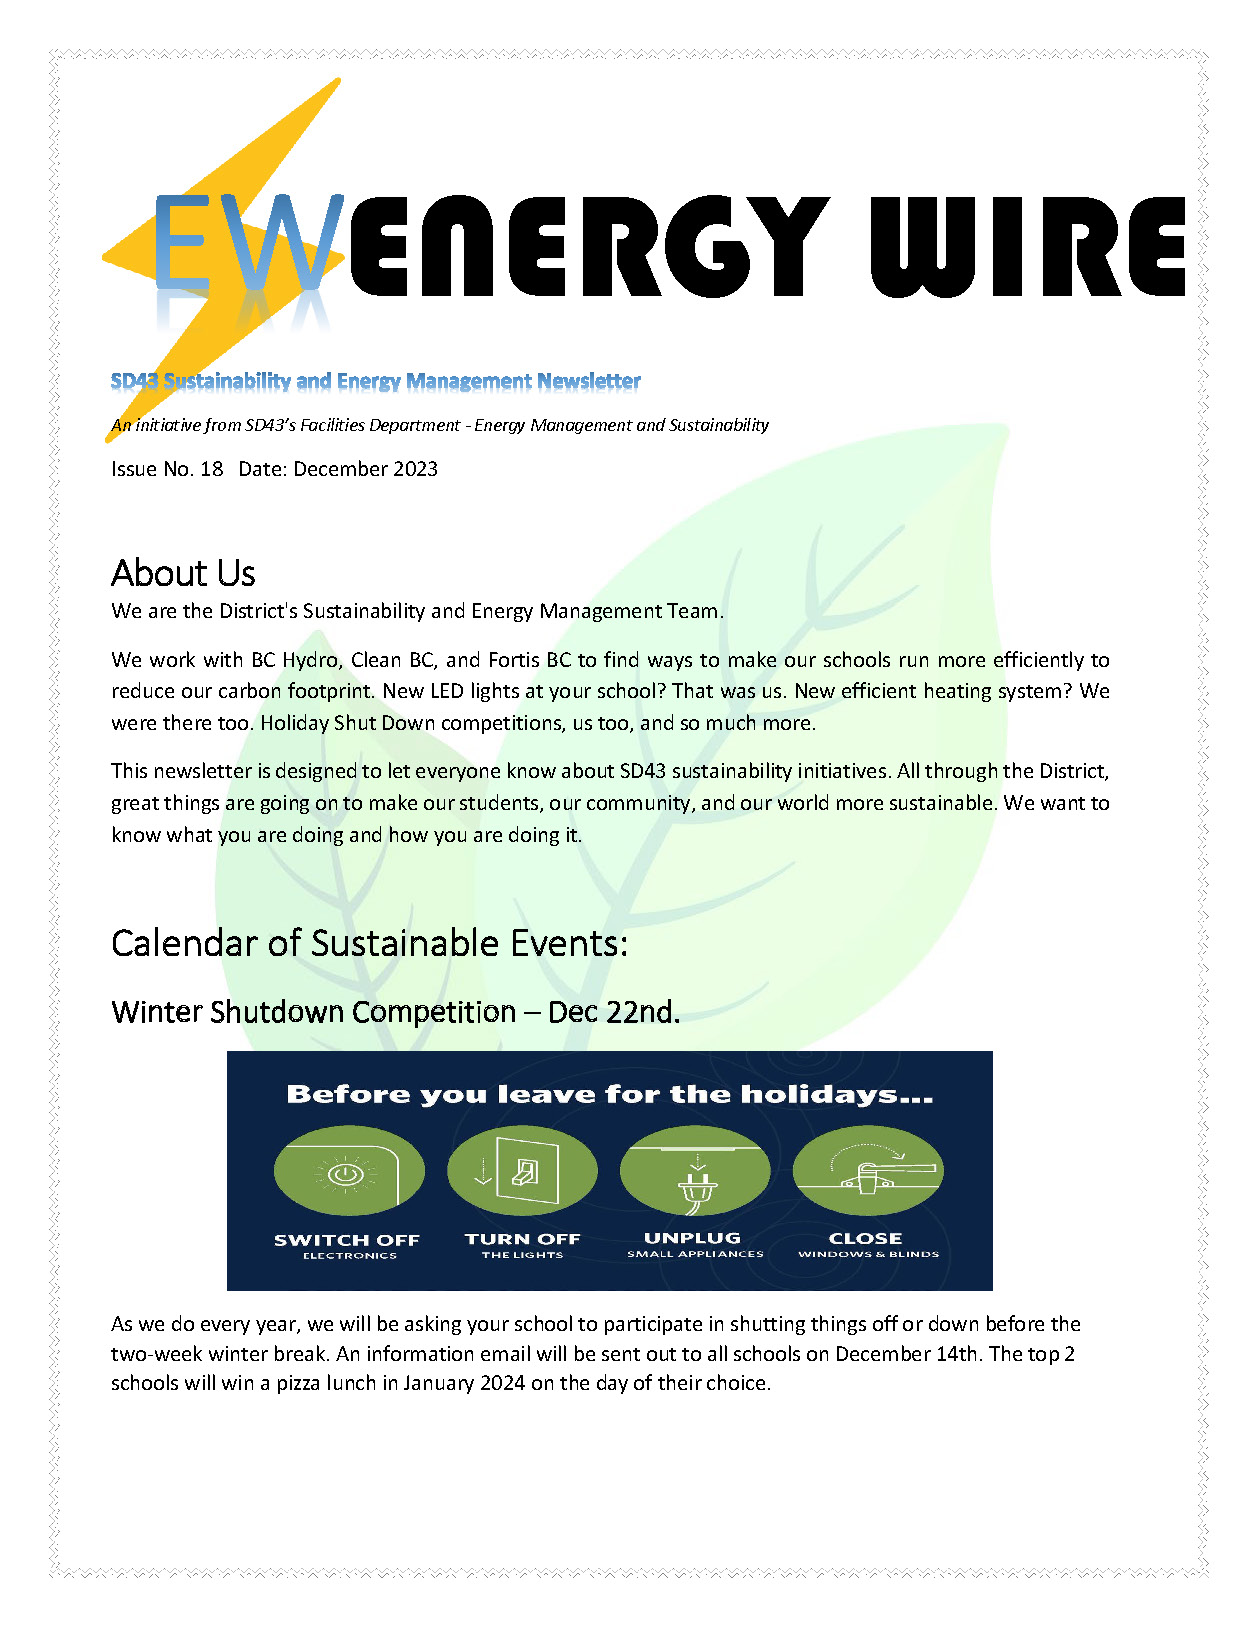 Energy Wire Newsletter Decemeber 2023_Page_1.jpg